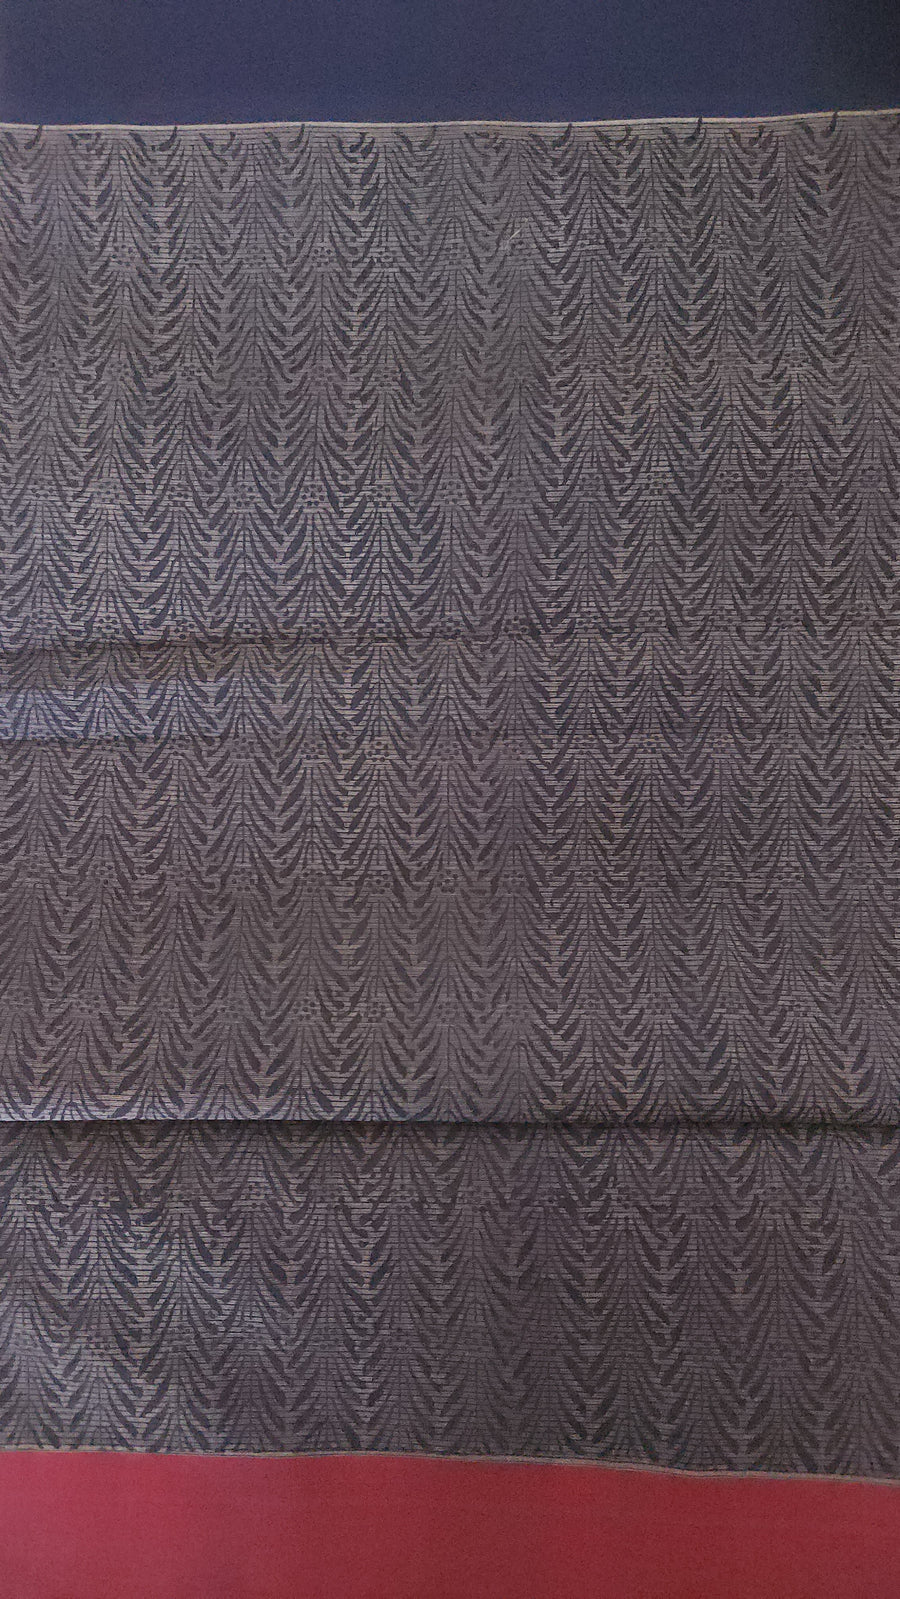 'SNIGDHA' Hand block printed on Handwoven Cotton